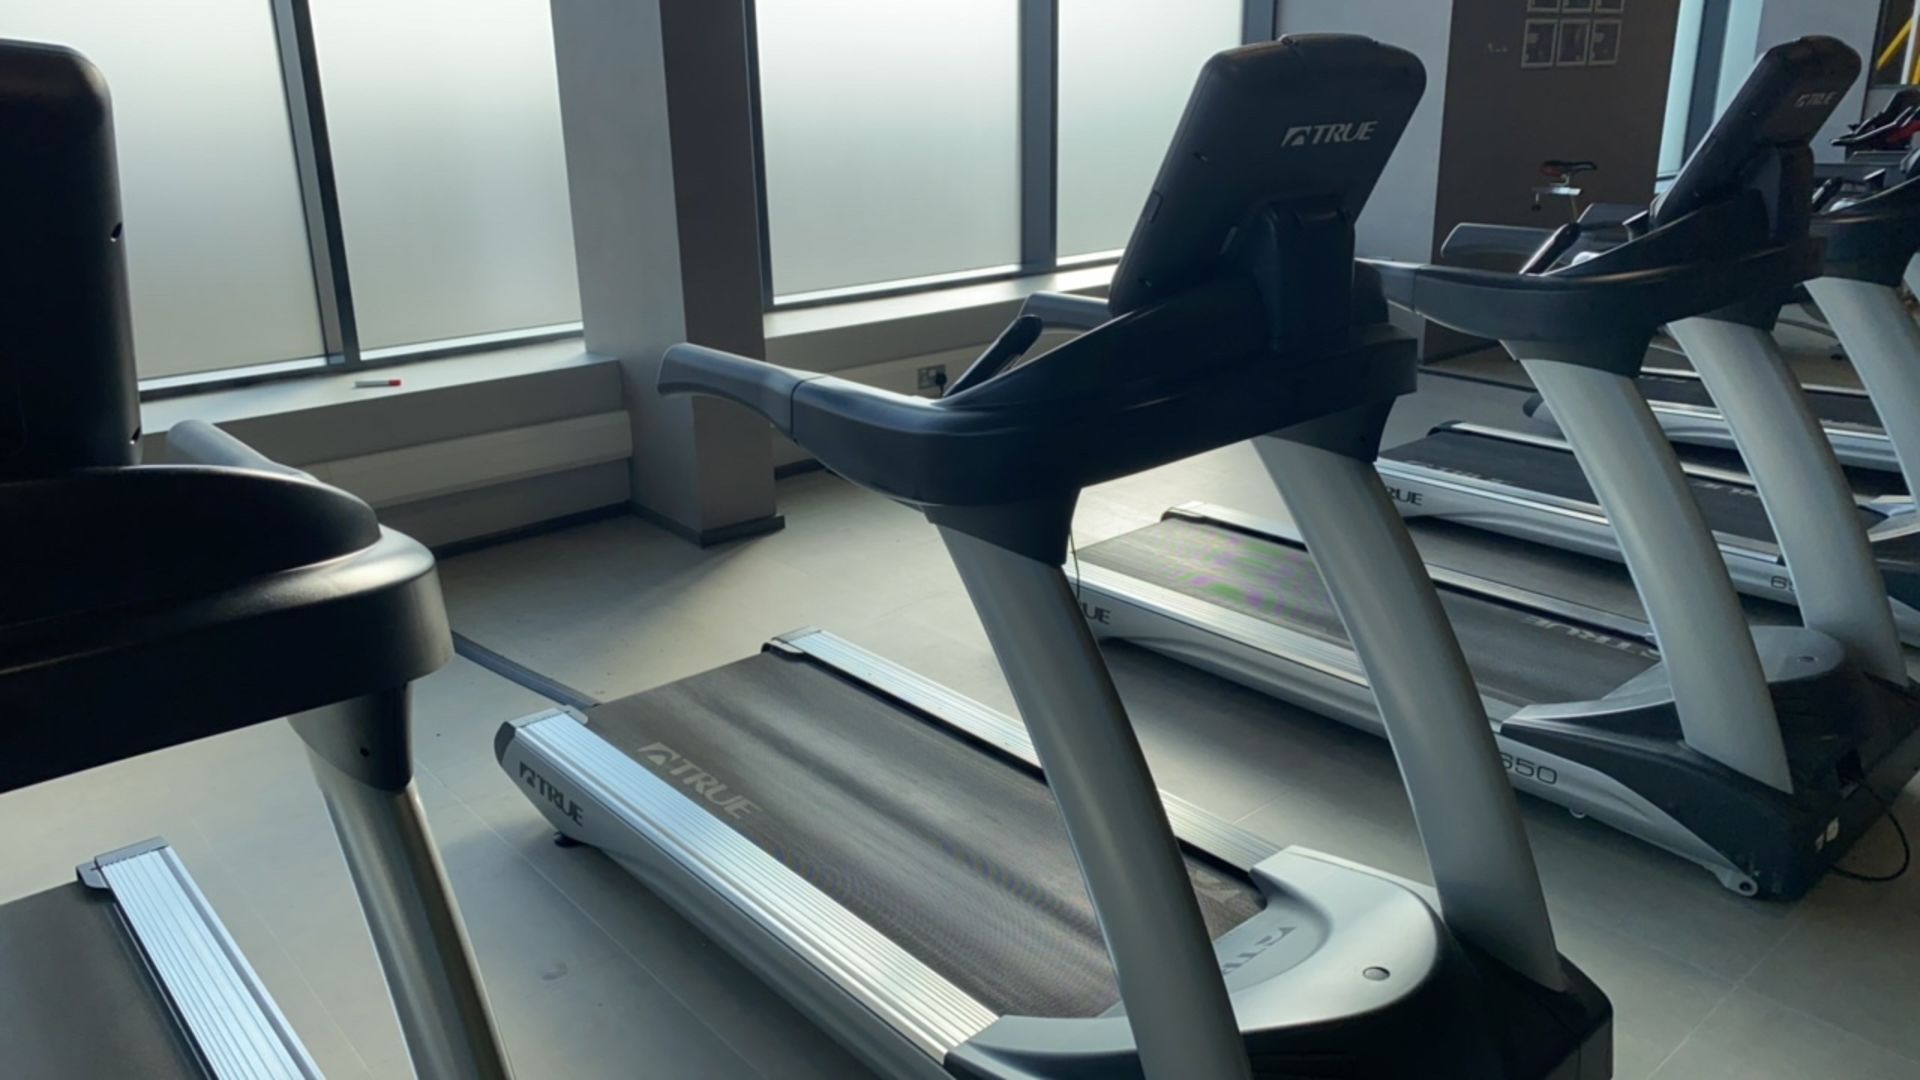 True Fitness Treadmill x1 - Image 3 of 5